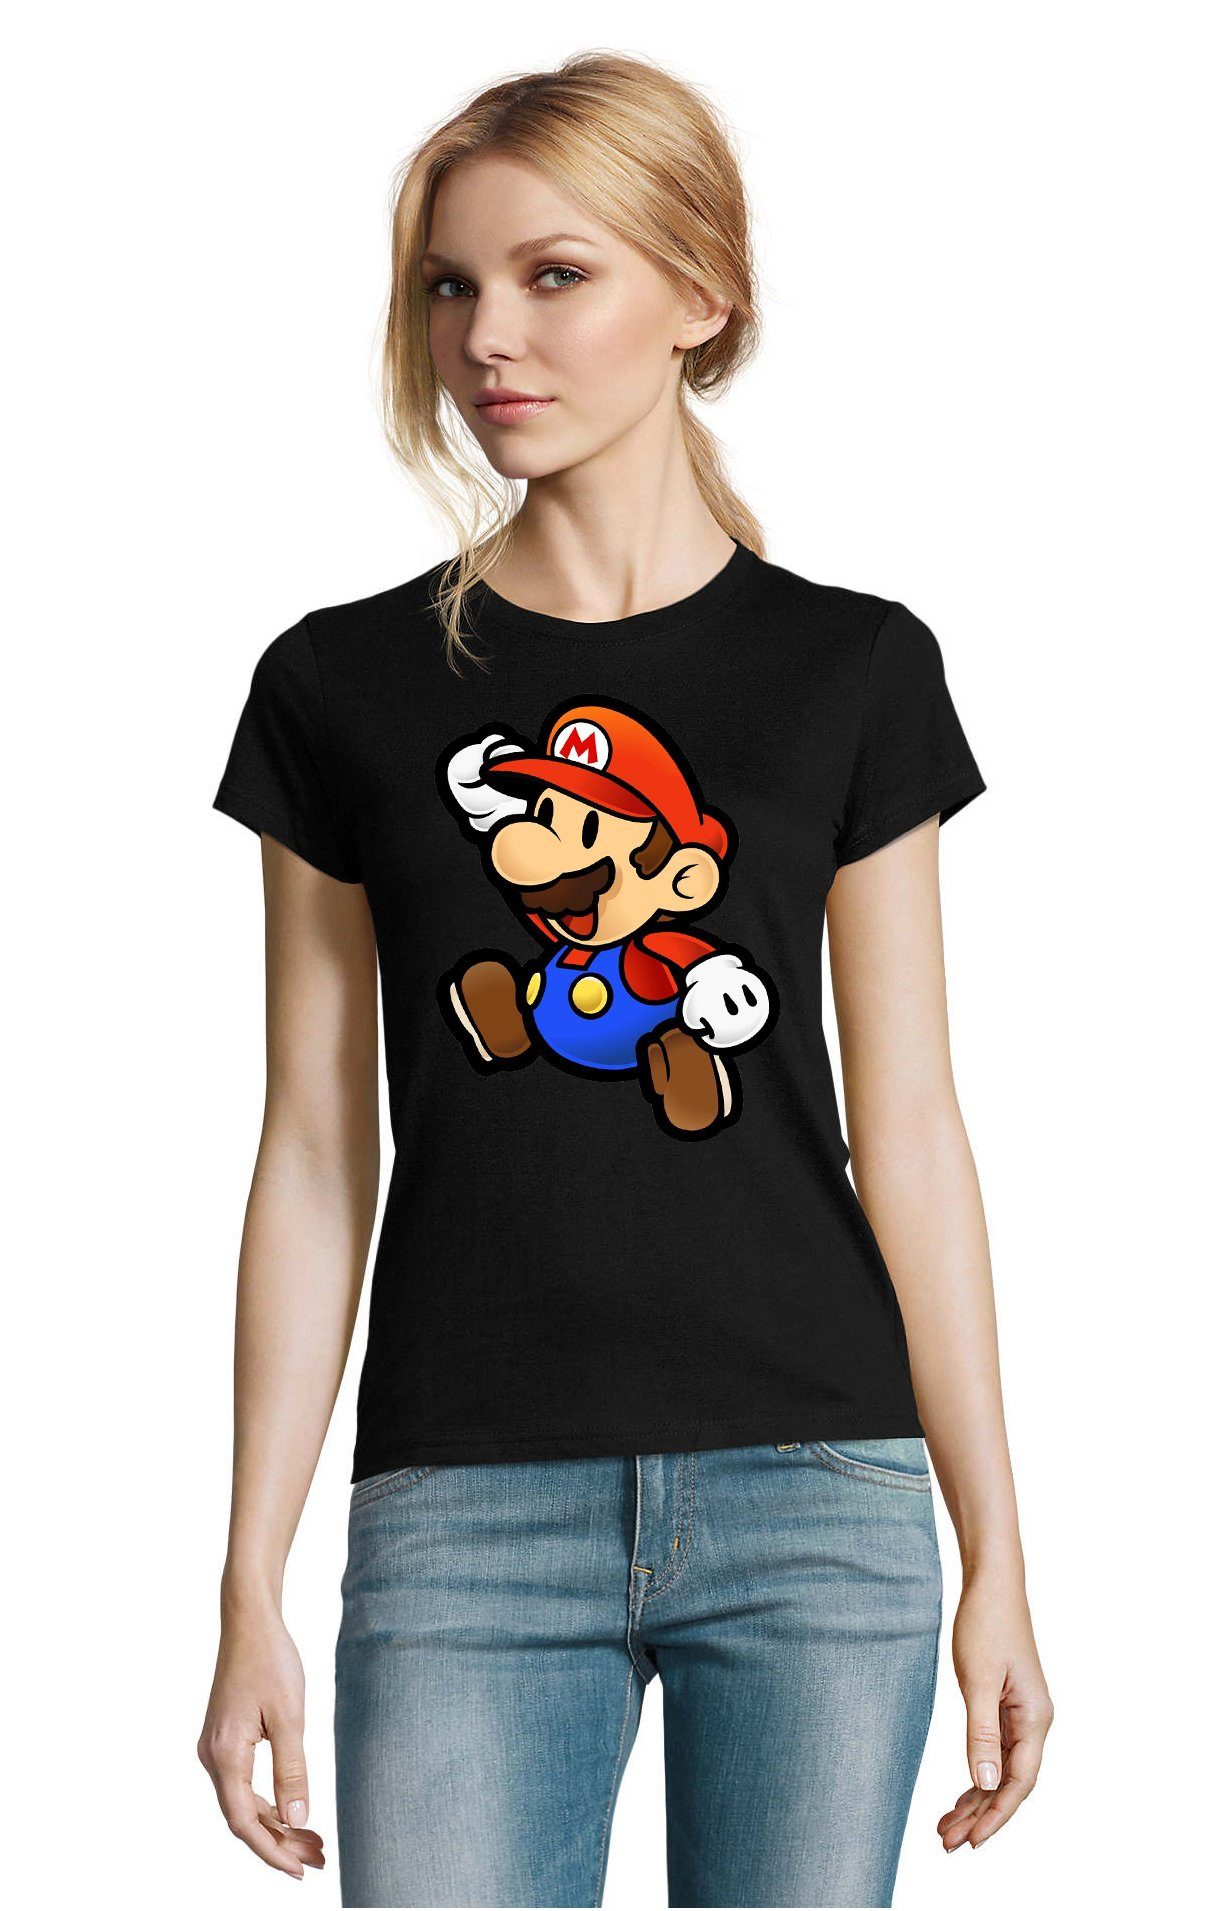 Blondie & Brownie T-Shirt Damen Mario Retro Super Gaming Luigi Yoshi Super